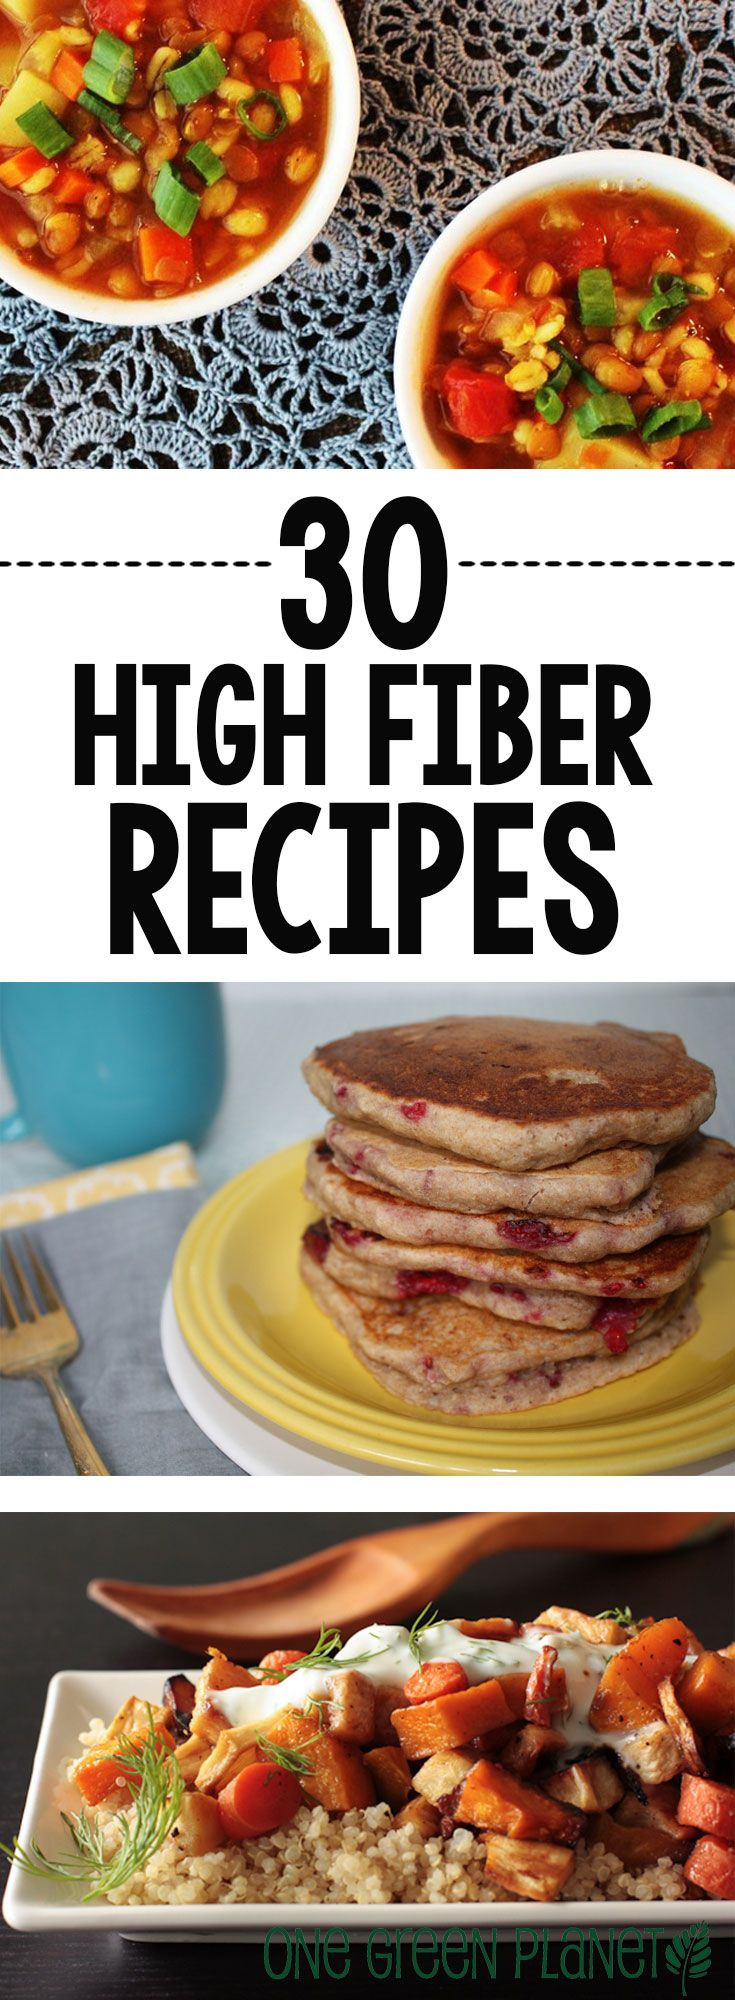 High Fiber Vegetarian Recipes
 30 Vegan High Fiber Recipes to Keep Your System Moving